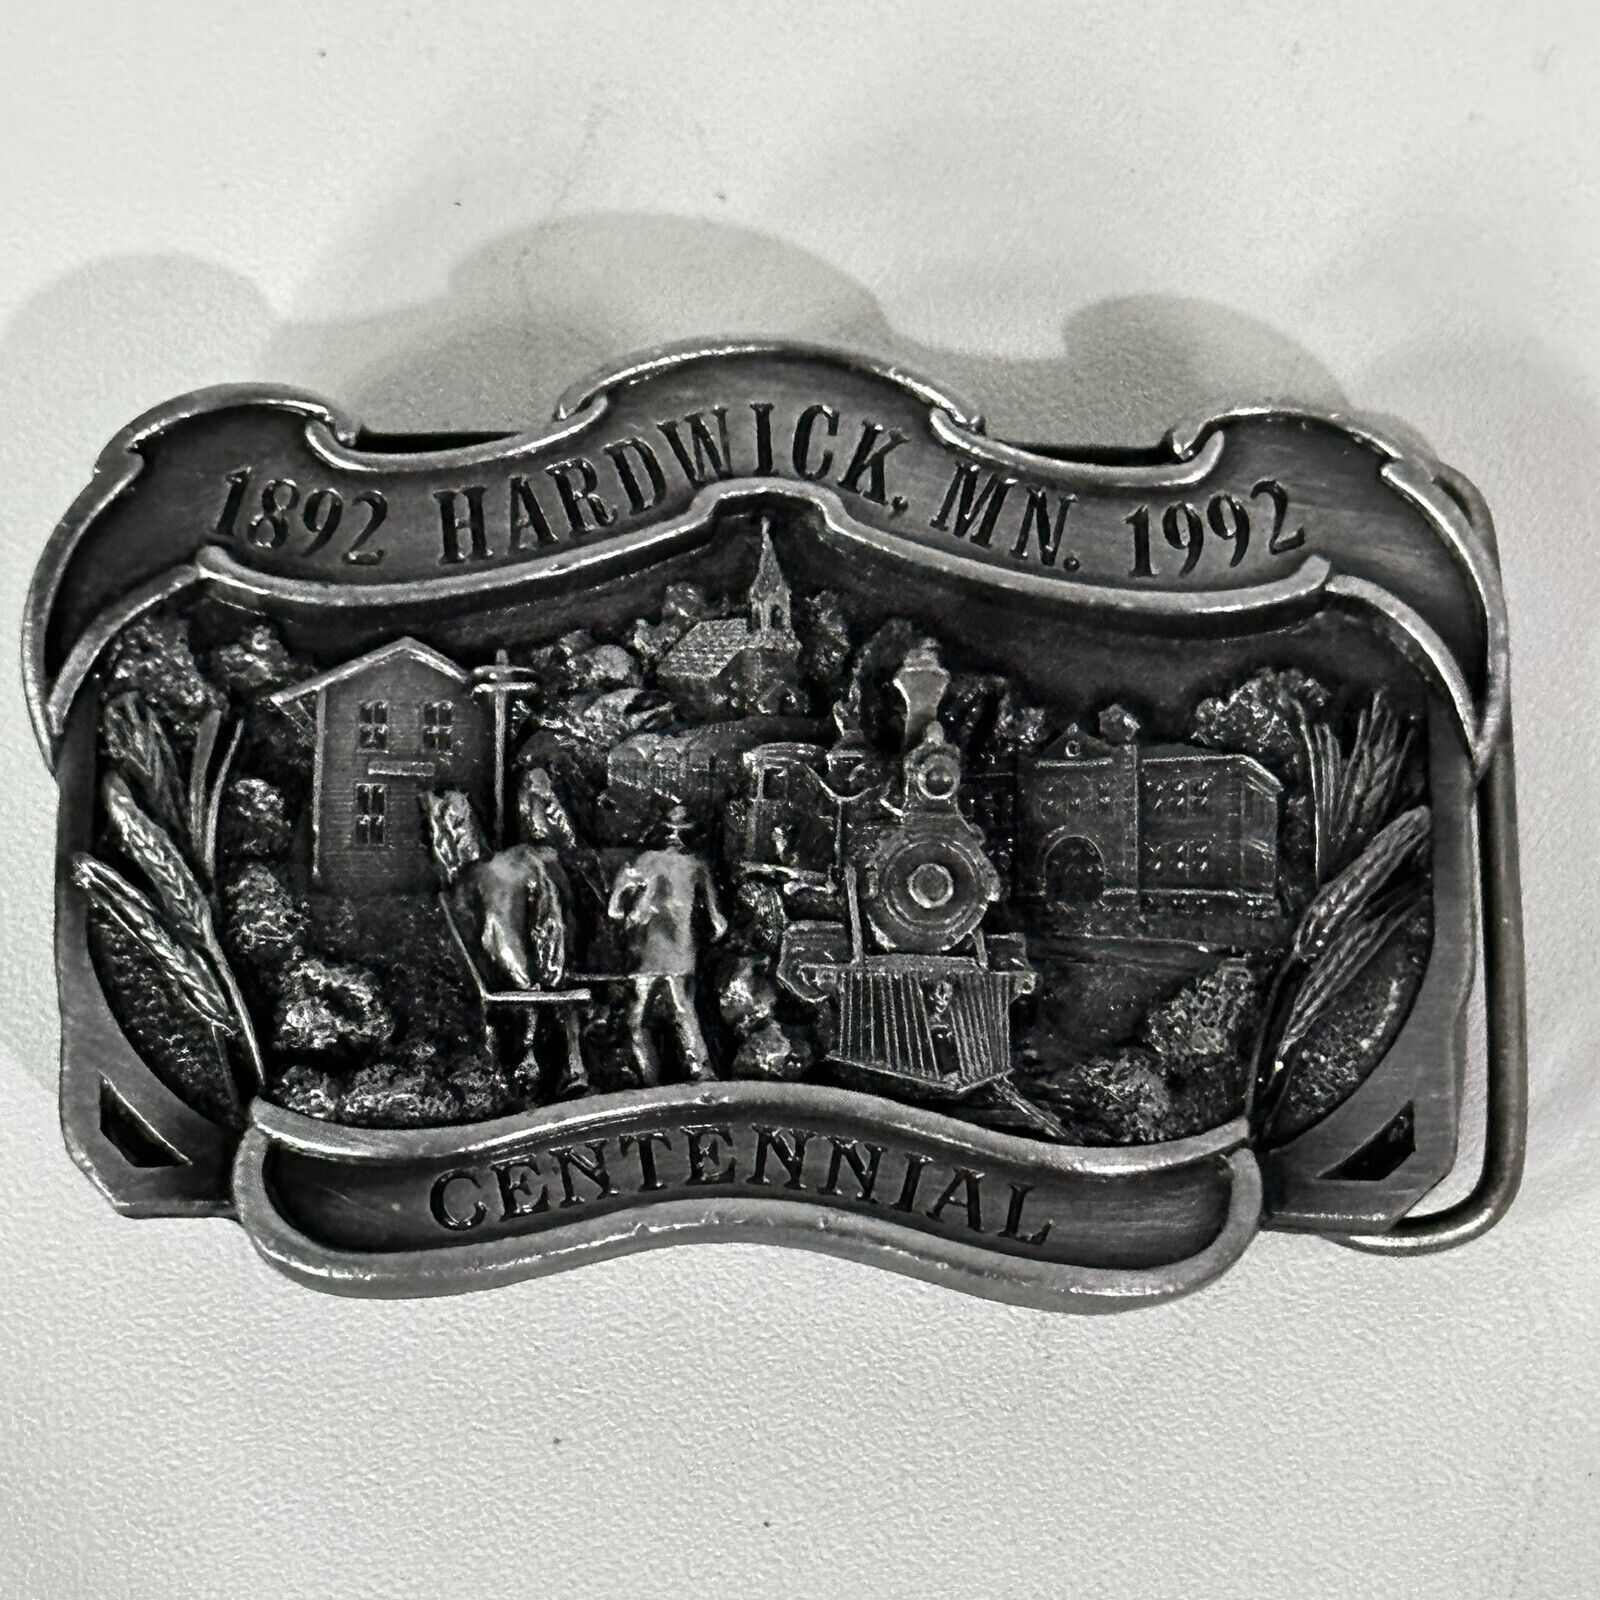 Hardwick MN 1892-1992 Centennial Limited Edition #144 of 250 Vintage Belt Buckle